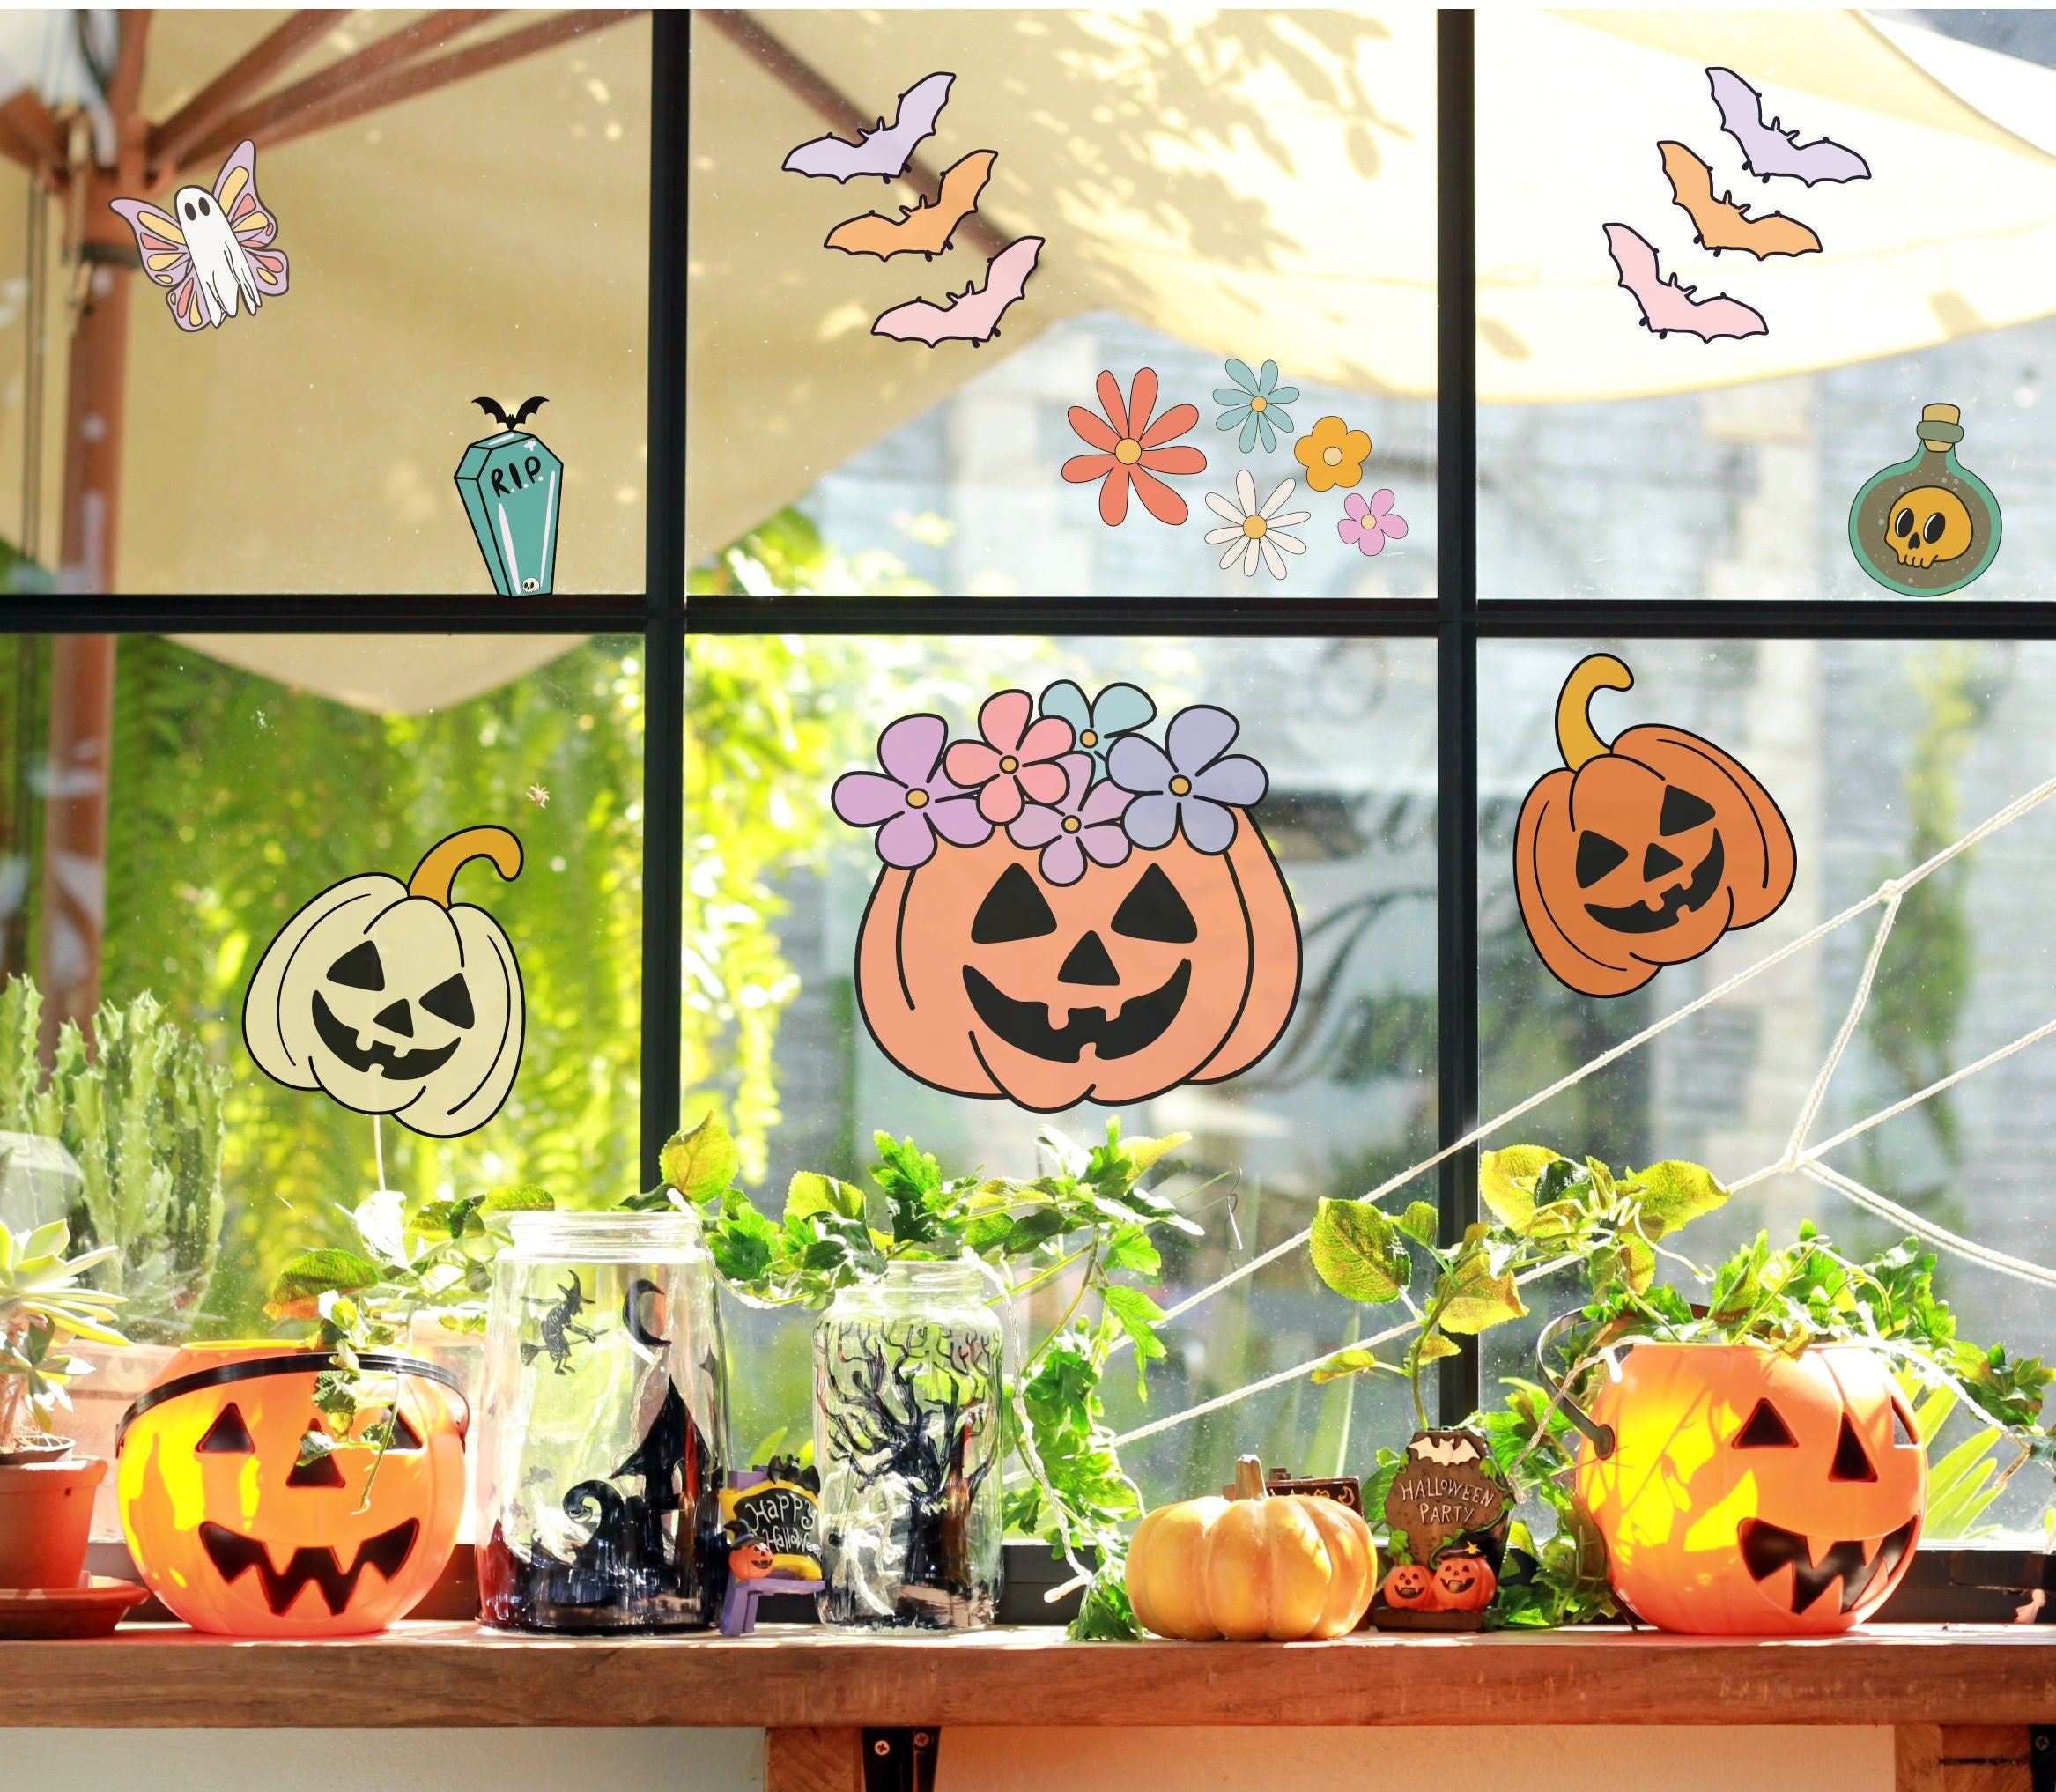 Retro Groovy Halloween Window Decorations Stickers, Pumpkin, Ghosts, Bats Mix Halloween Decor